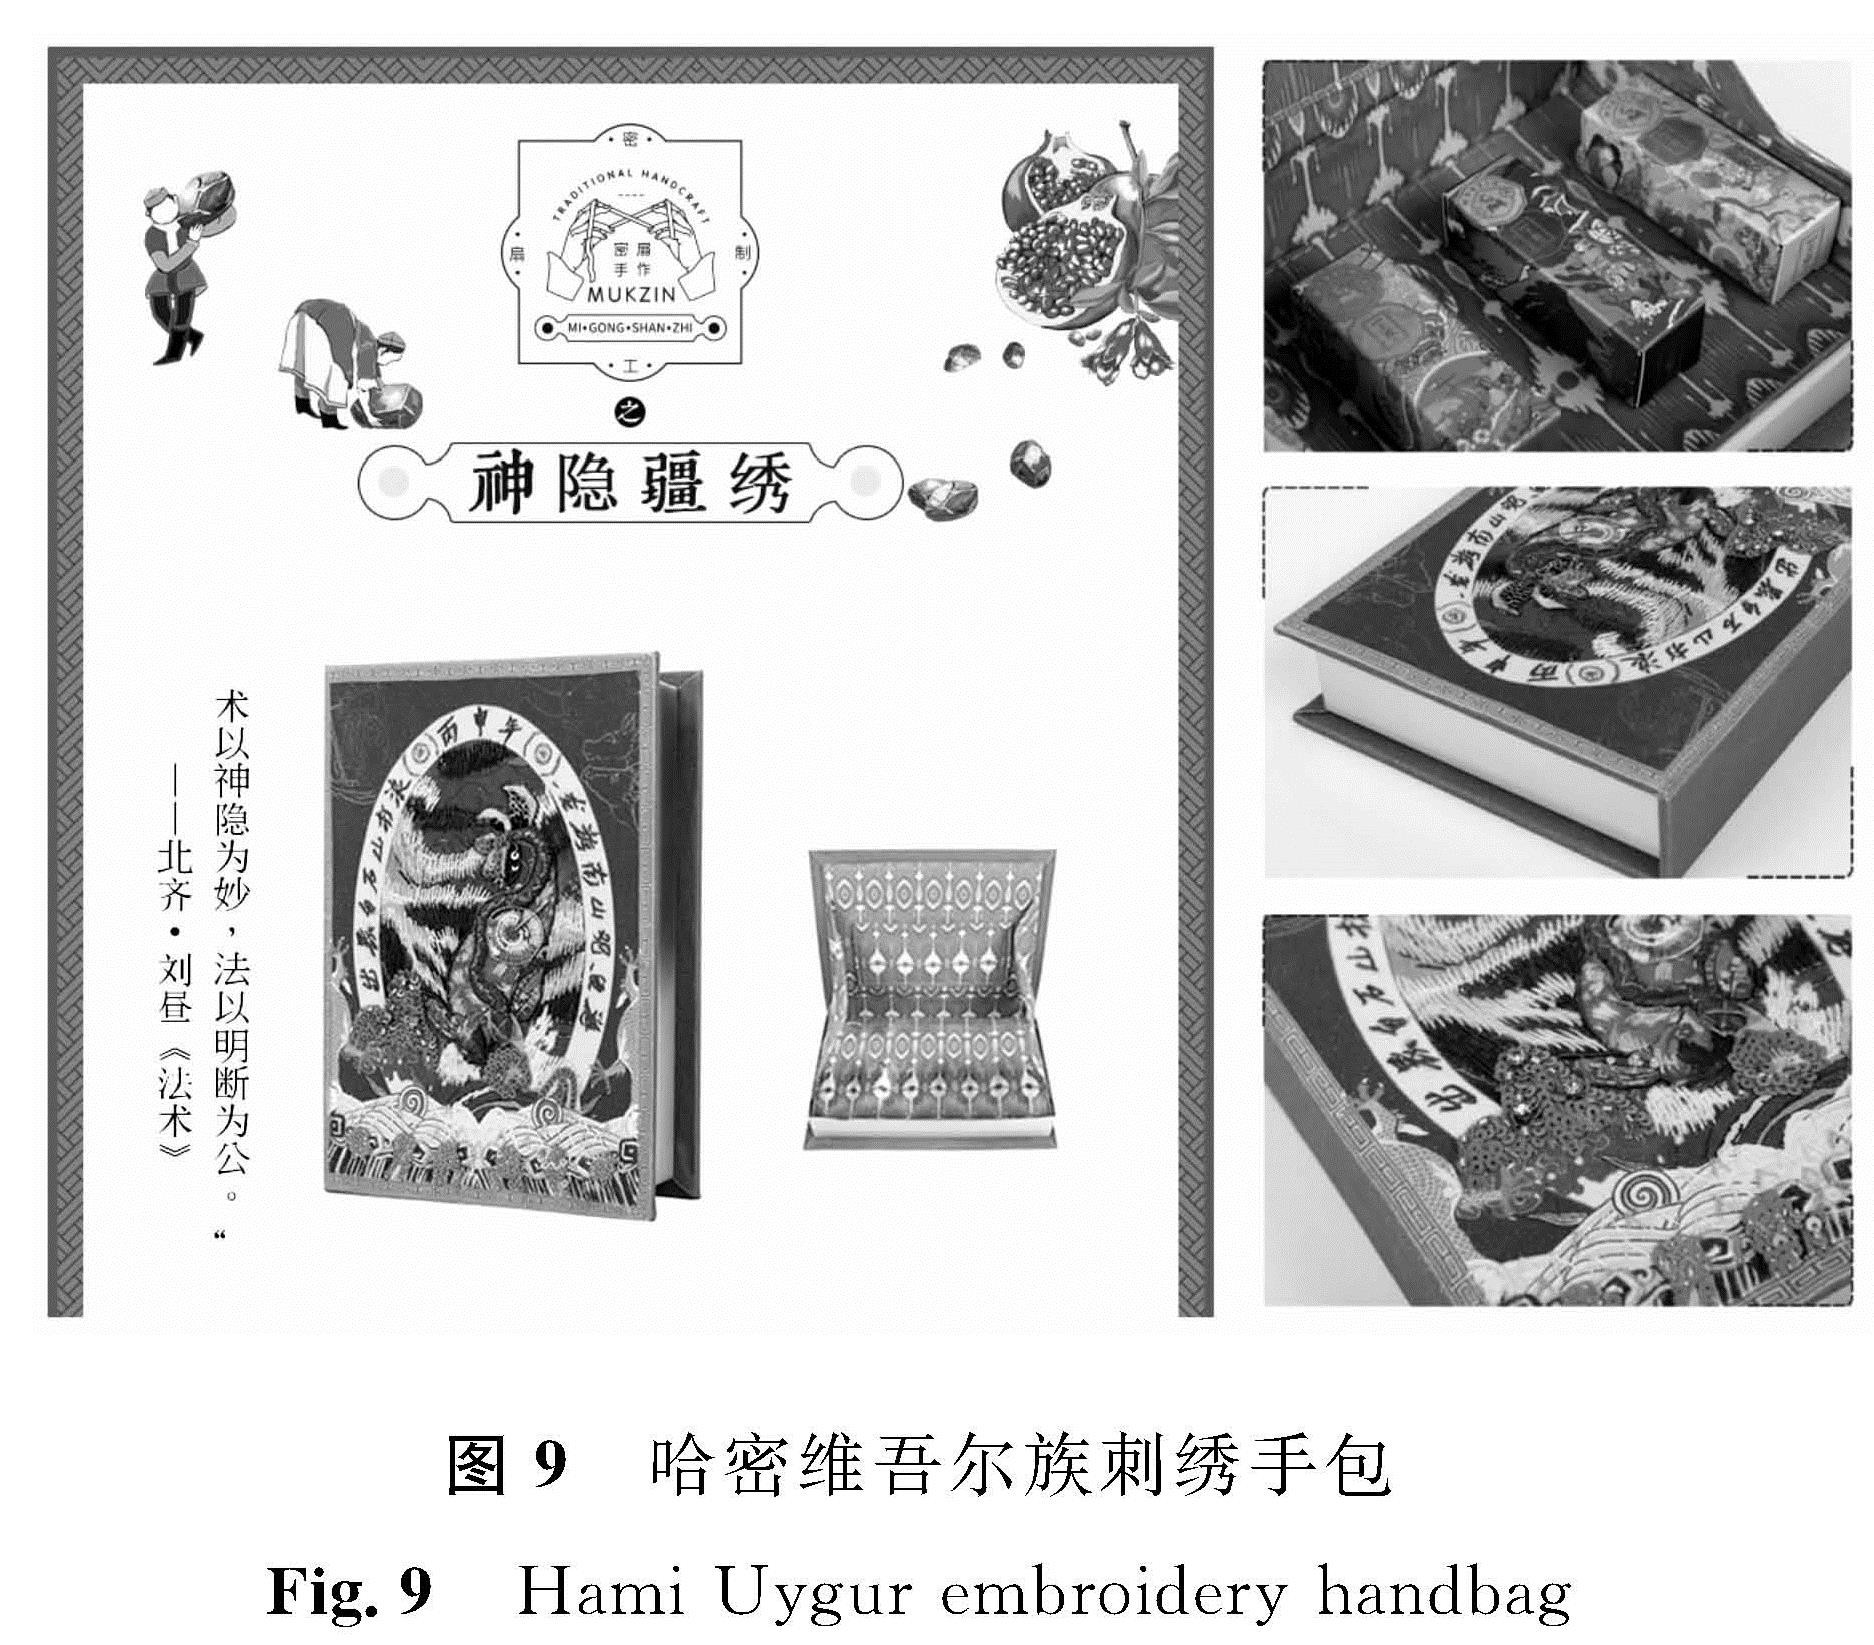 图9 哈密维吾尔族刺绣手包<br/>Fig.9 Hami Uygur embroidery handbag